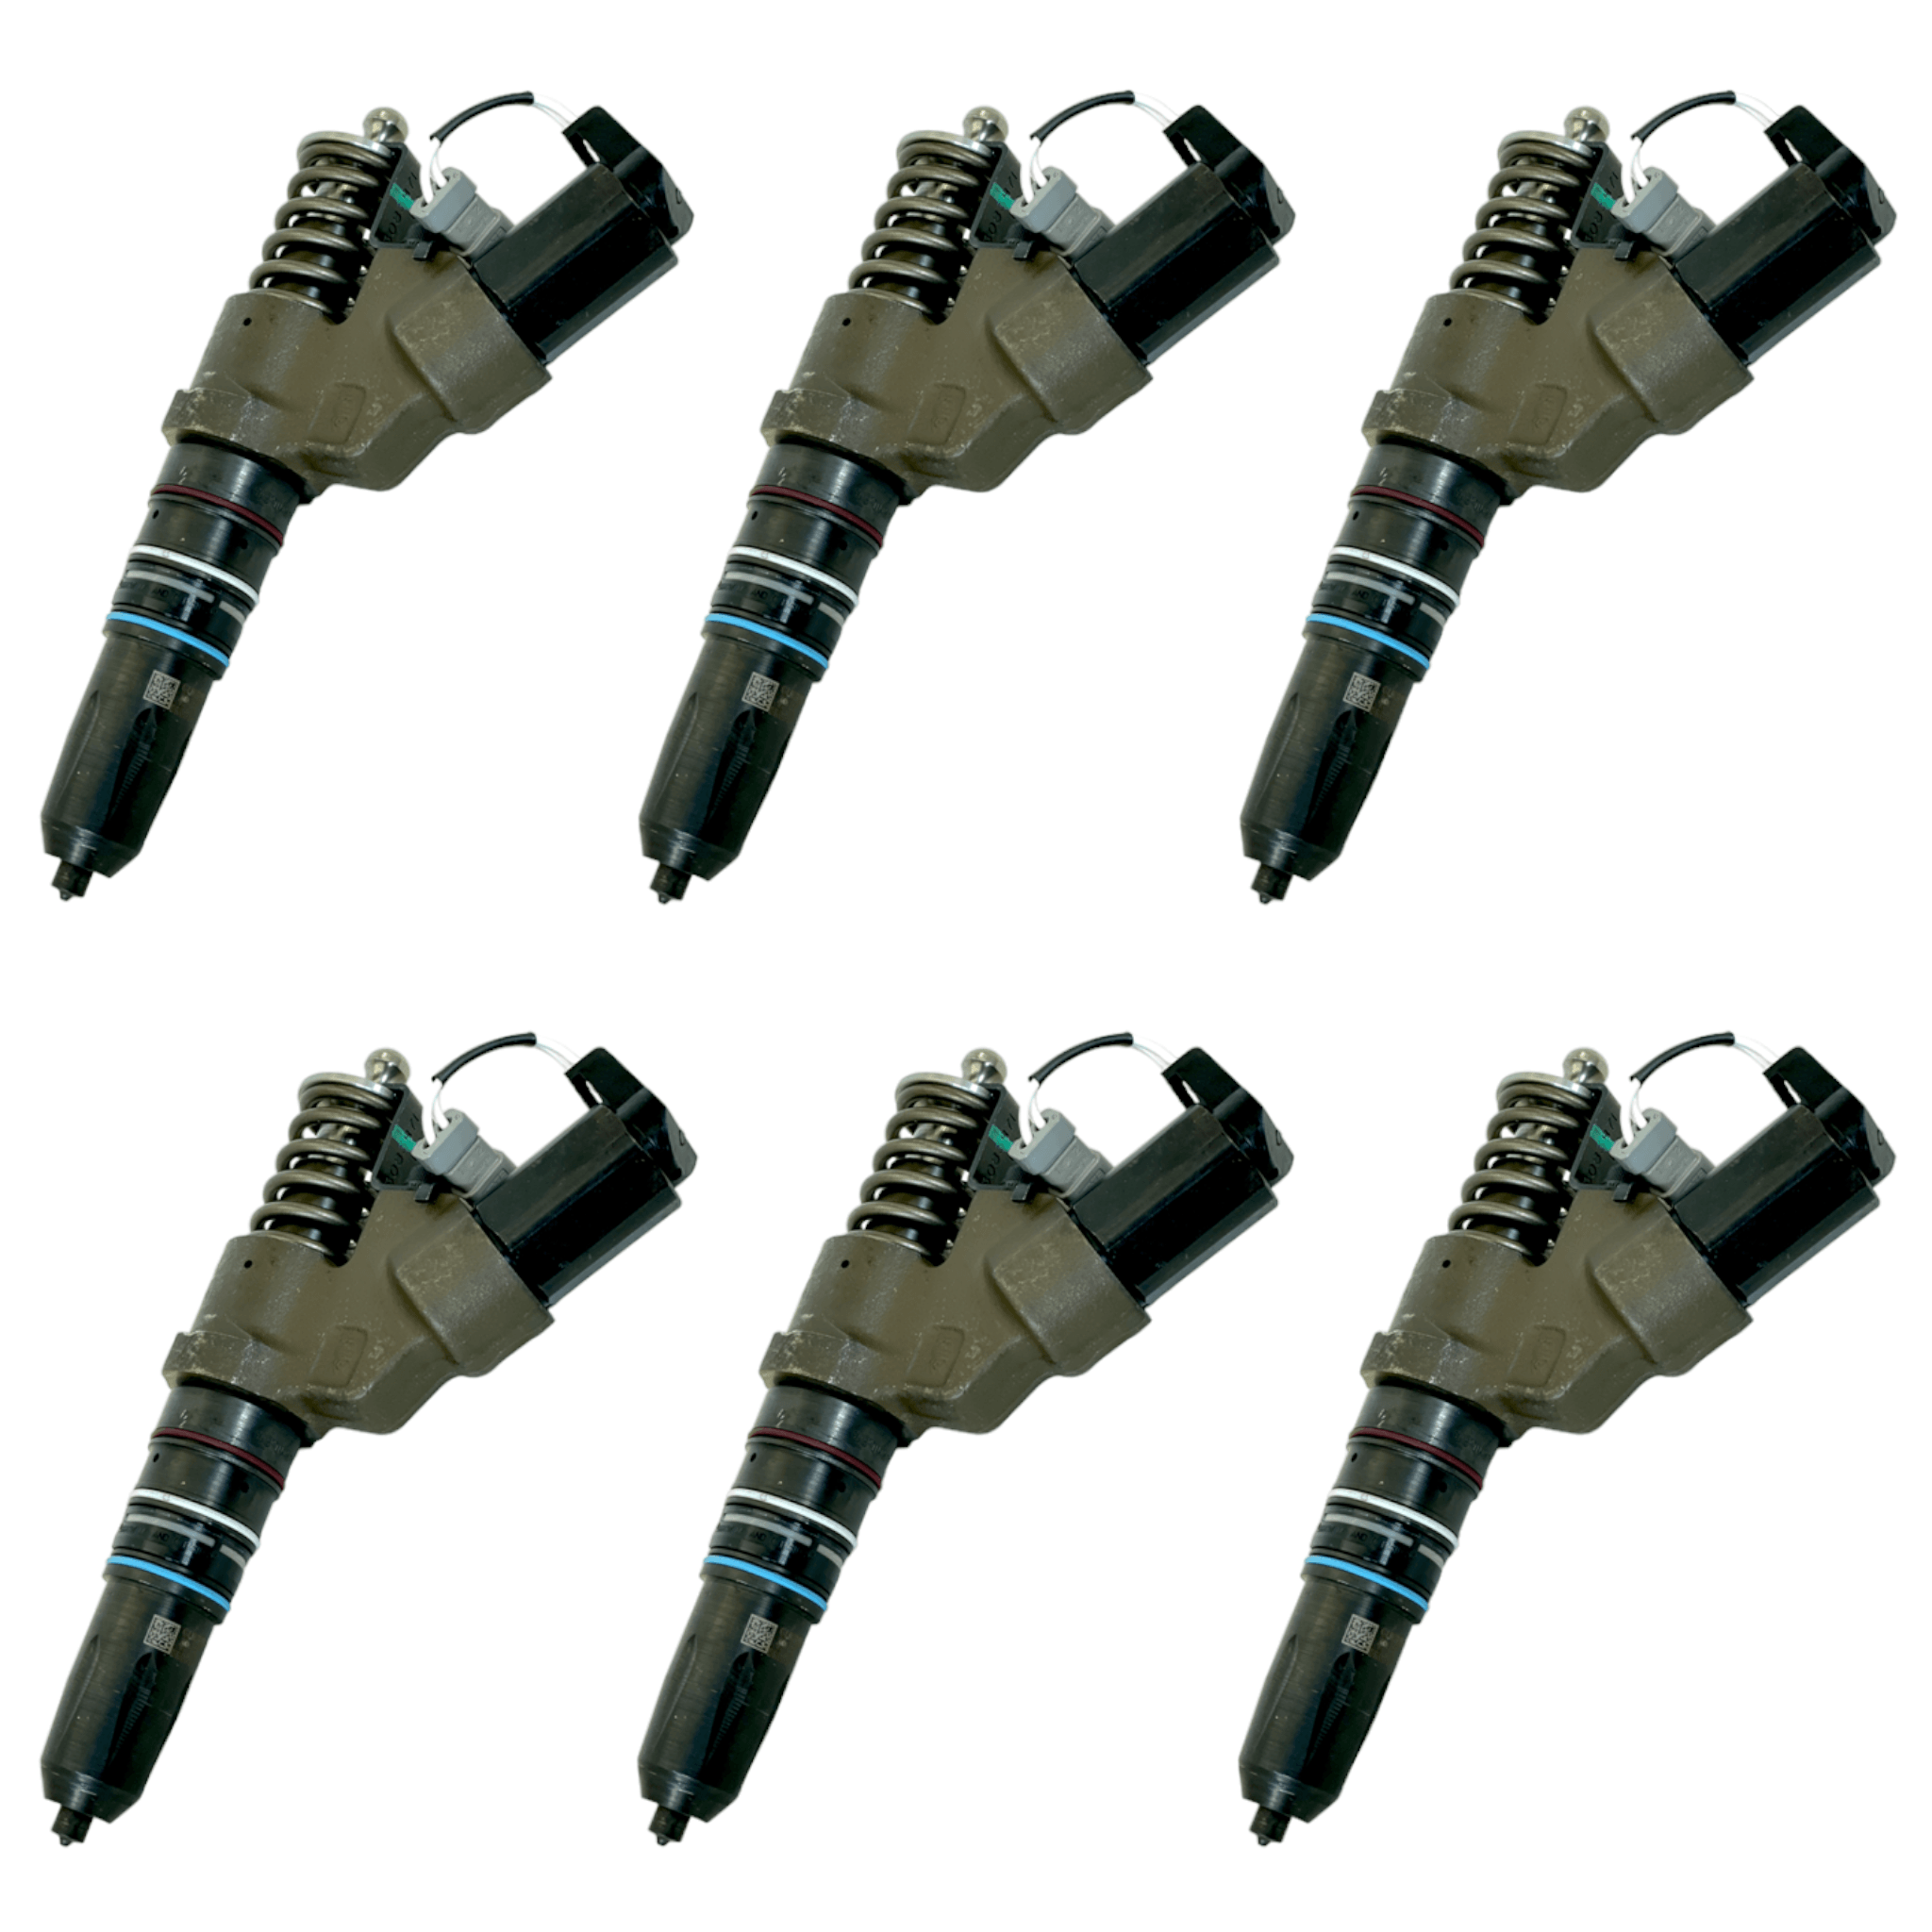 4903472 Genuine Cummins Fuel Injectors Set Of Six For Cummins M11 - ADVANCED TRUCK PARTS